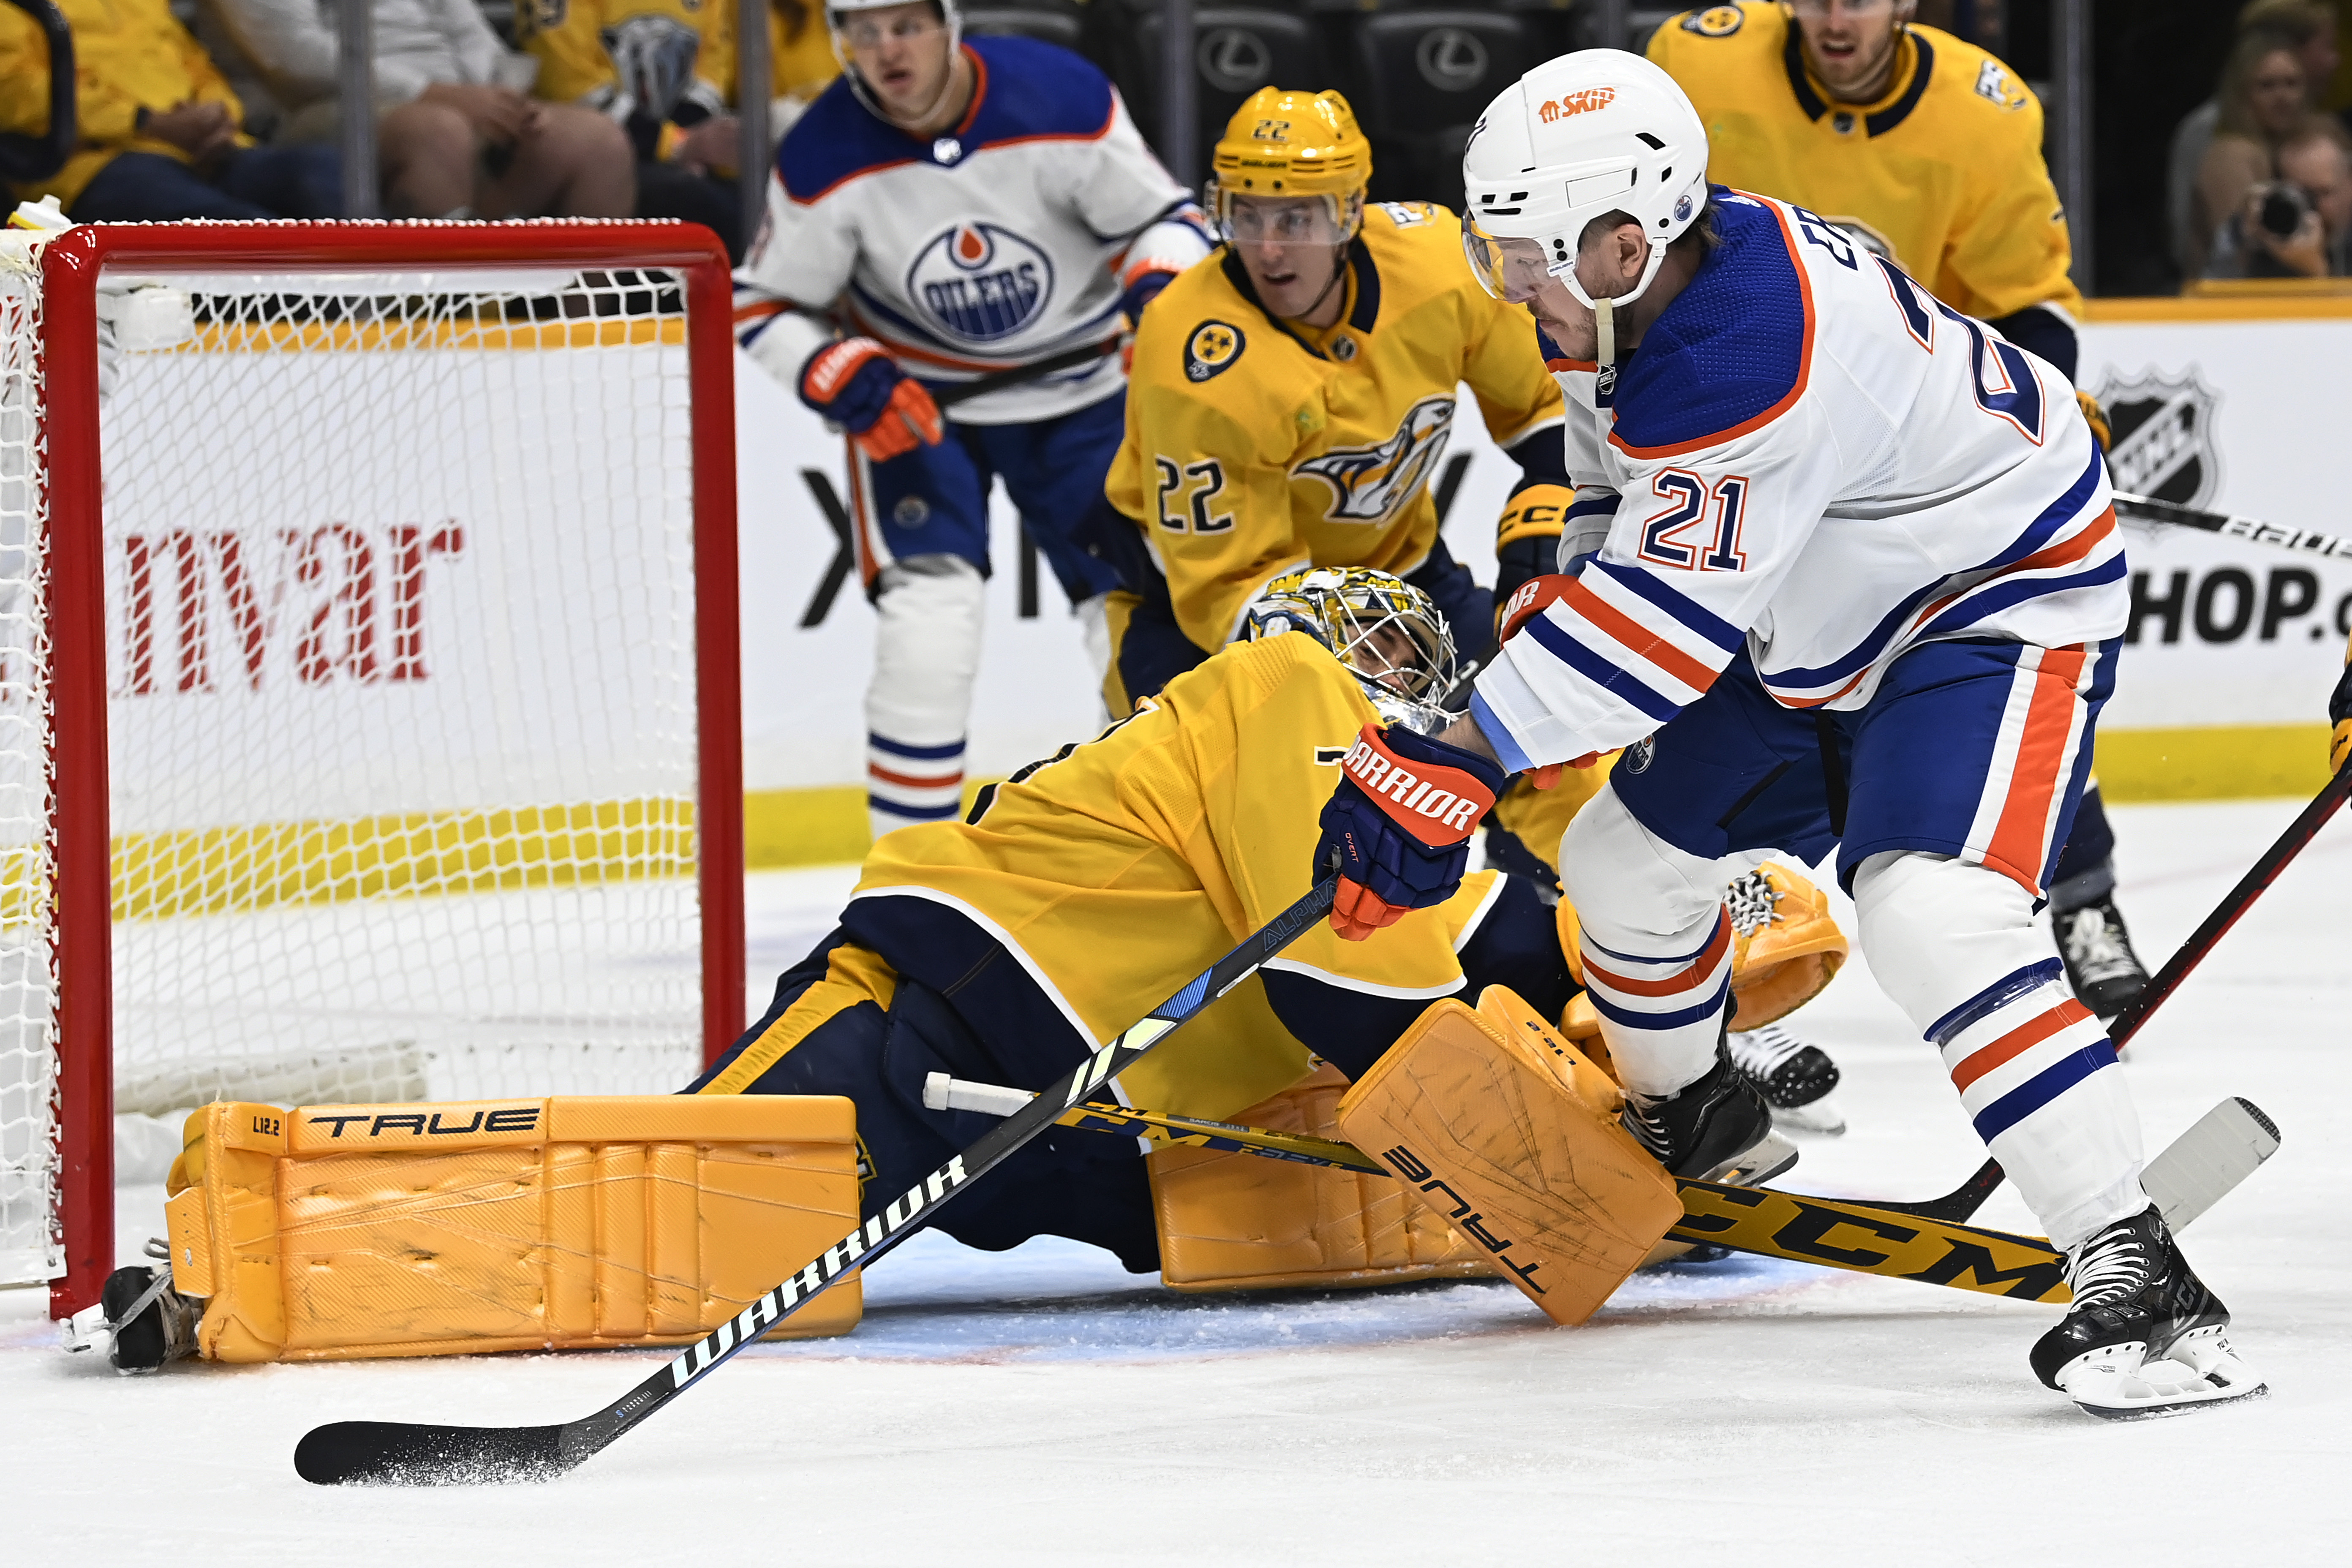 Draisaitl's two goals lead Edmonton Oilers past Nashville Predators